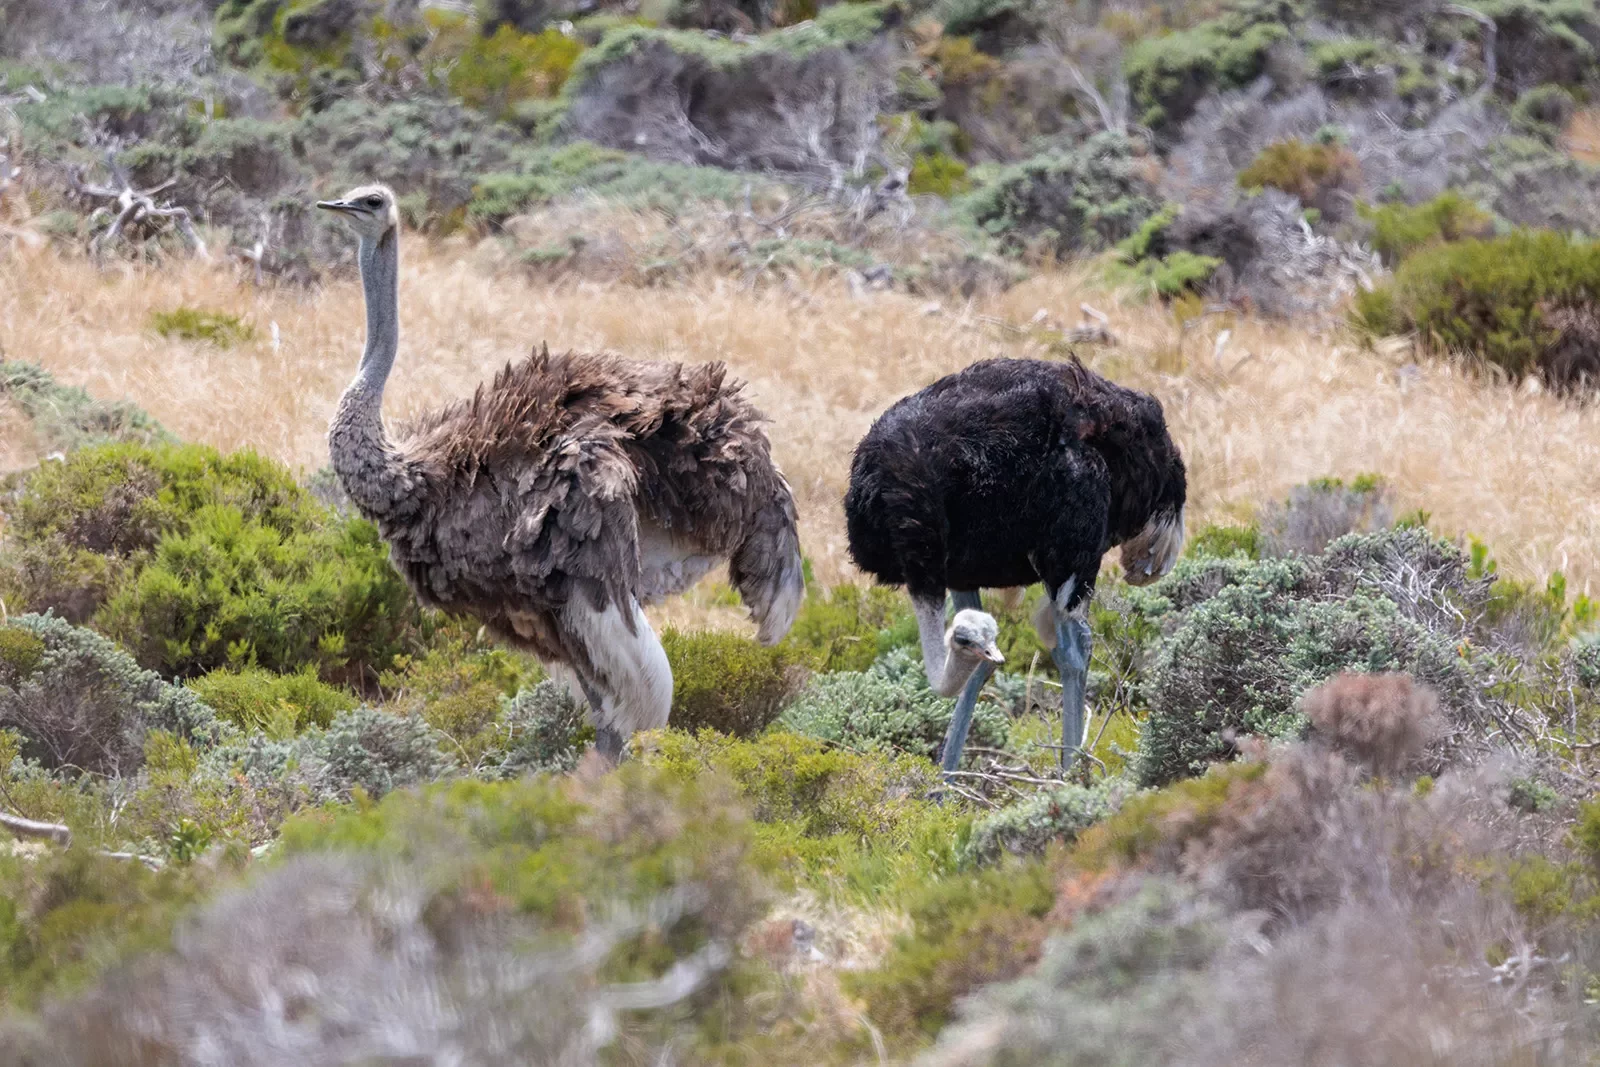 Two ostriches walk through brush